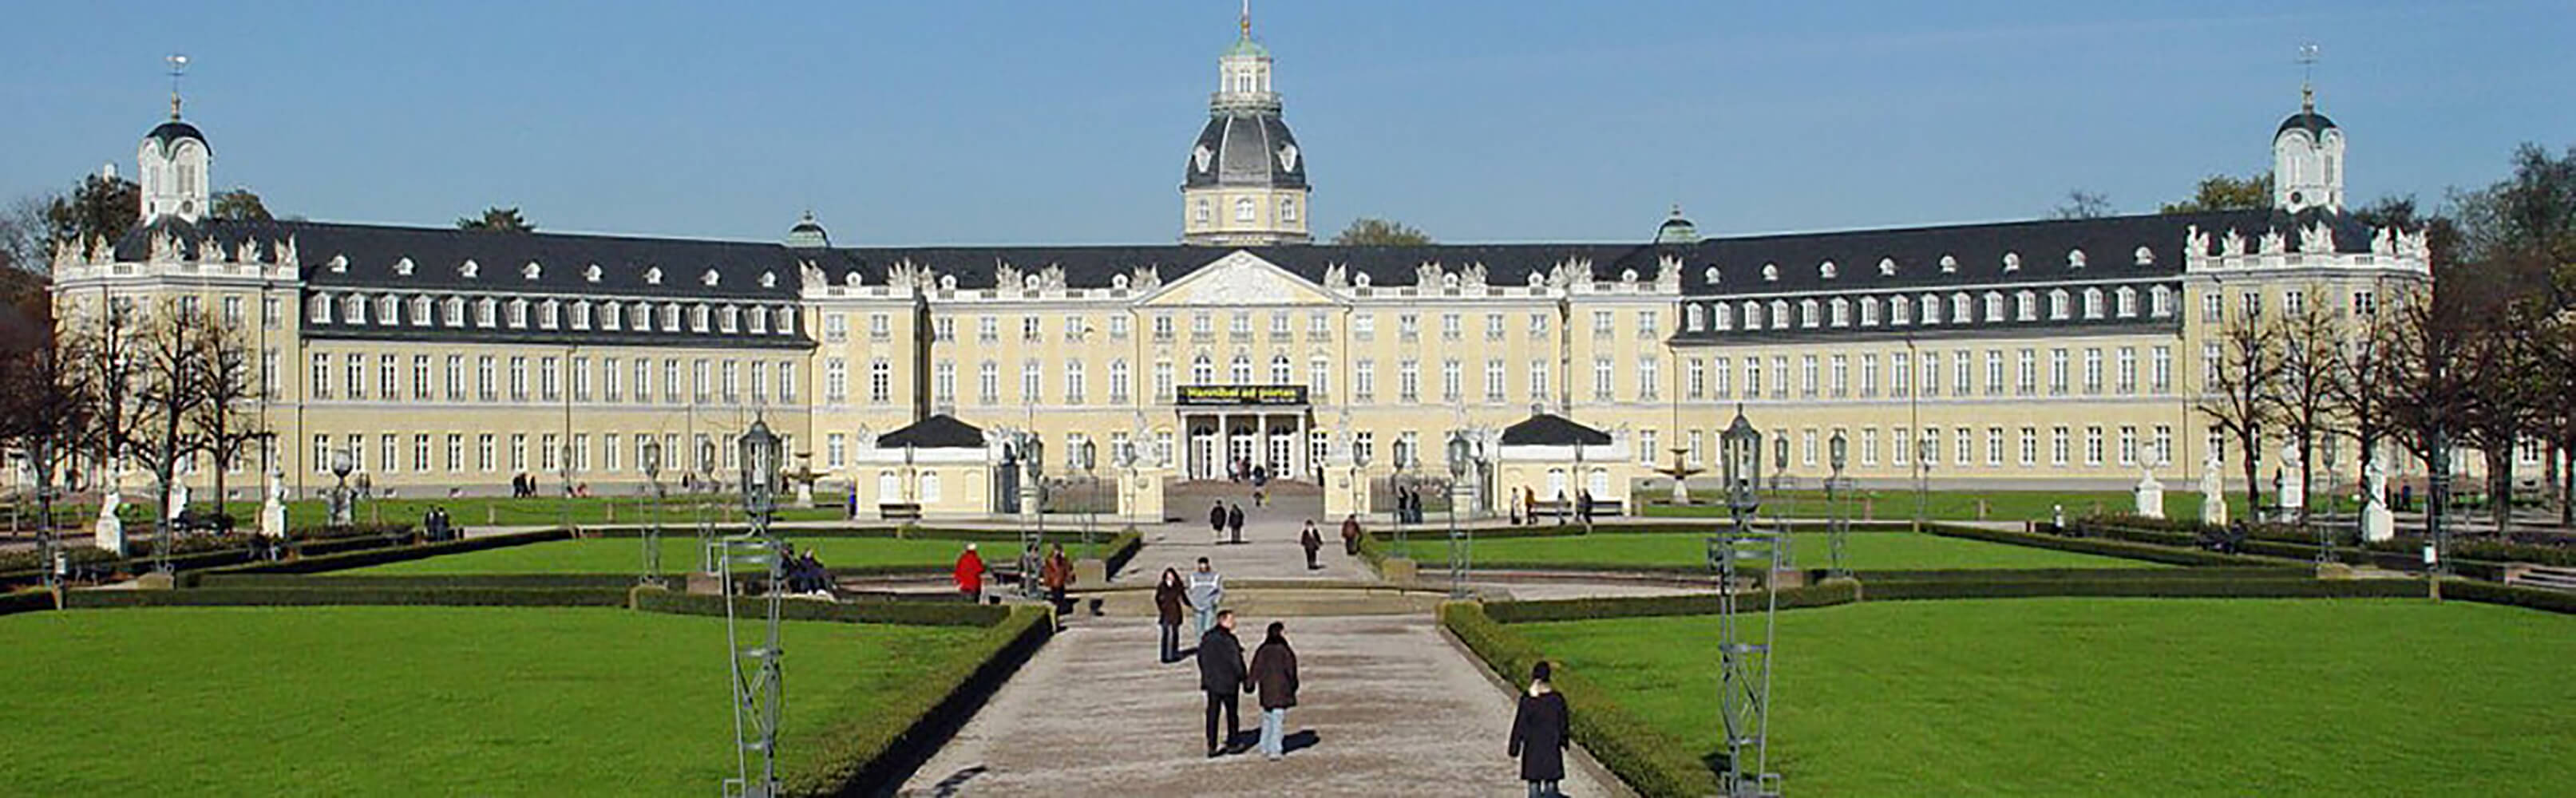 Schloss Karlsruhe 1